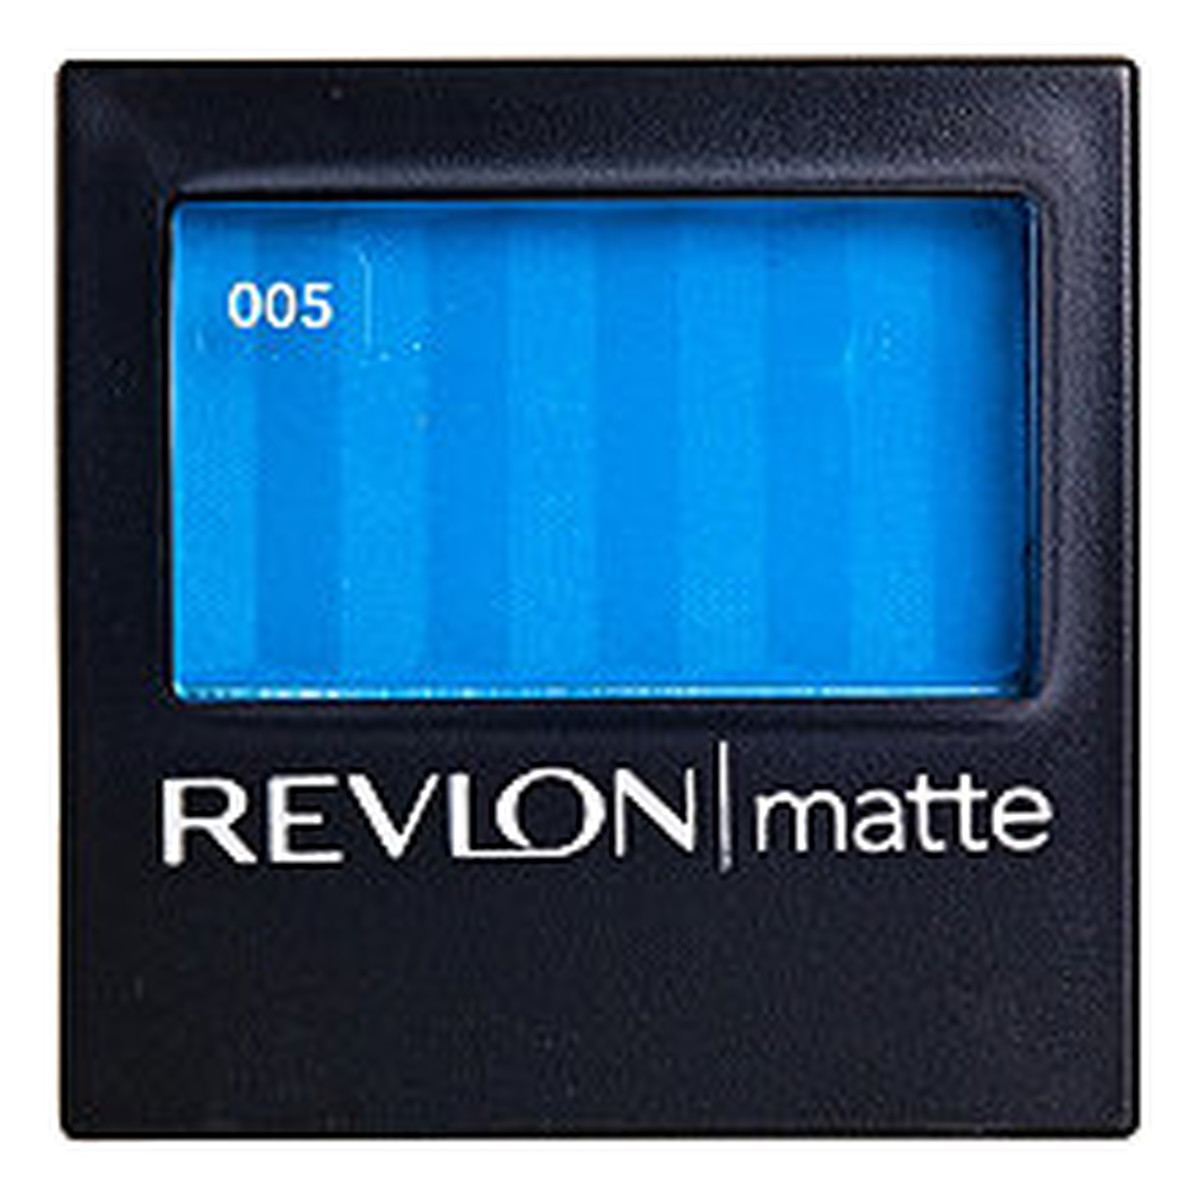 Revlon Matte Cienie Do Powiek Venetian Blue (005) 2ml